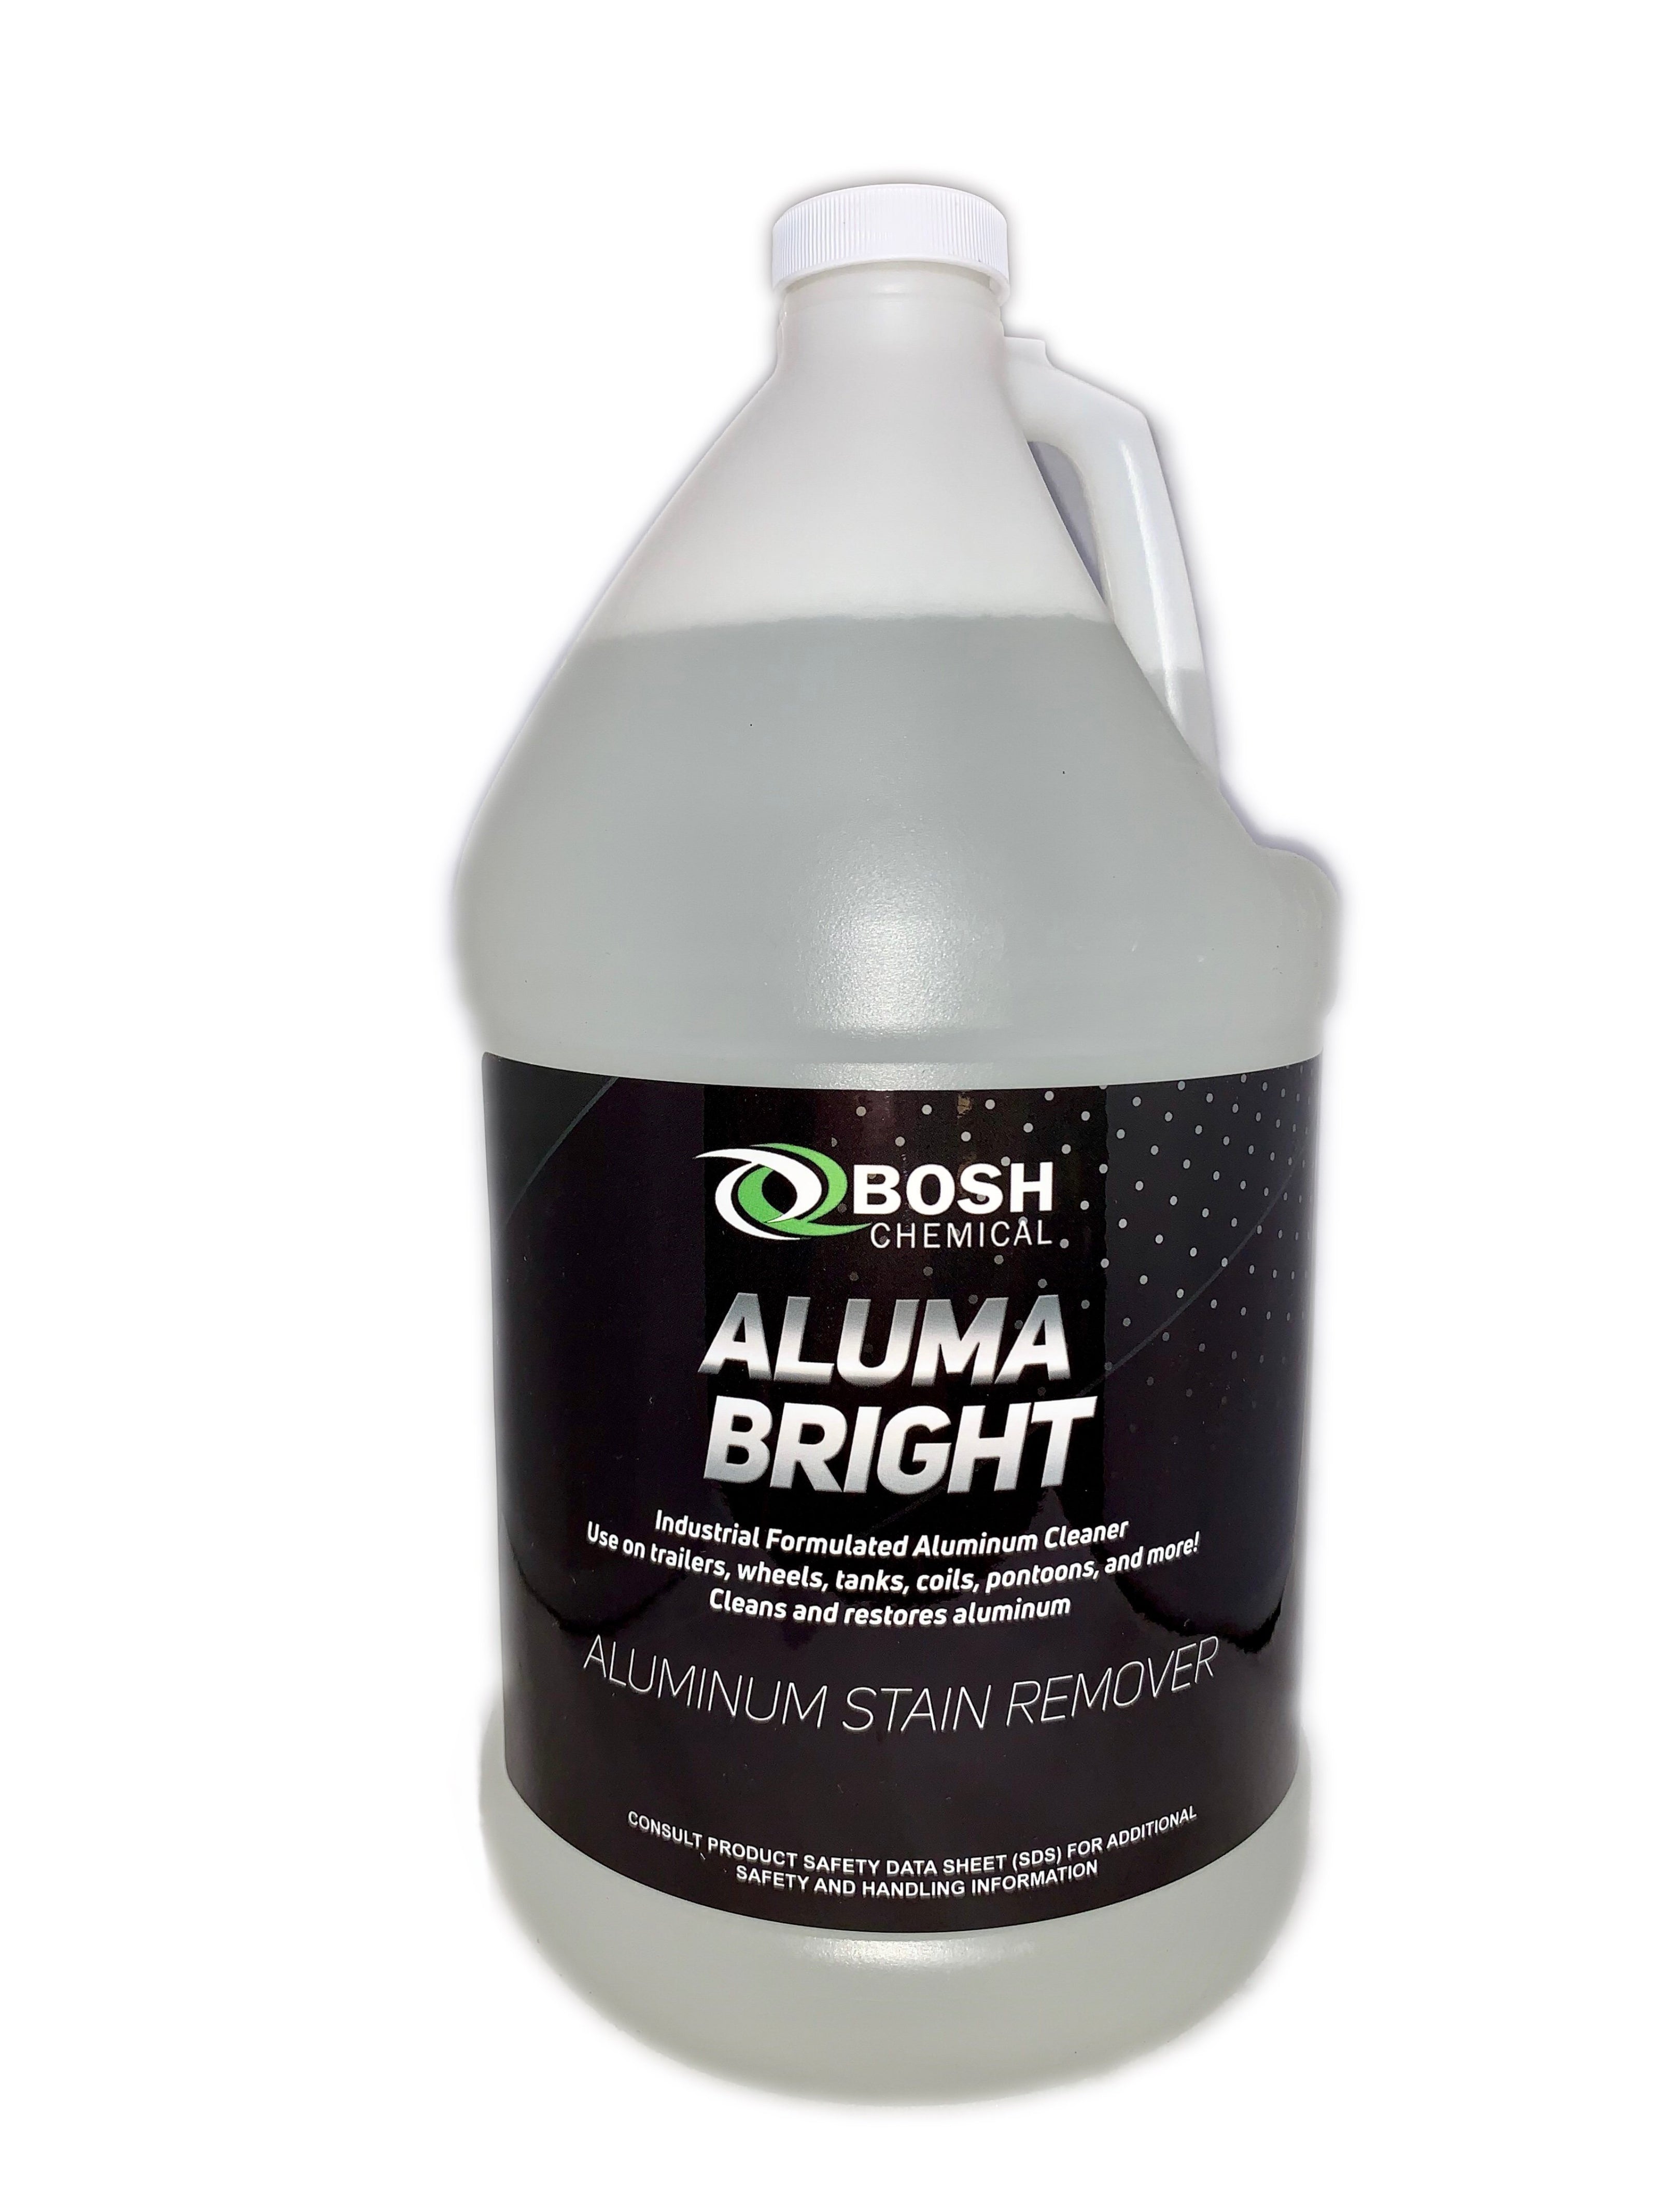 Best Cleaning Supply - AlumaNew Aluminum Cleaner & Brightener